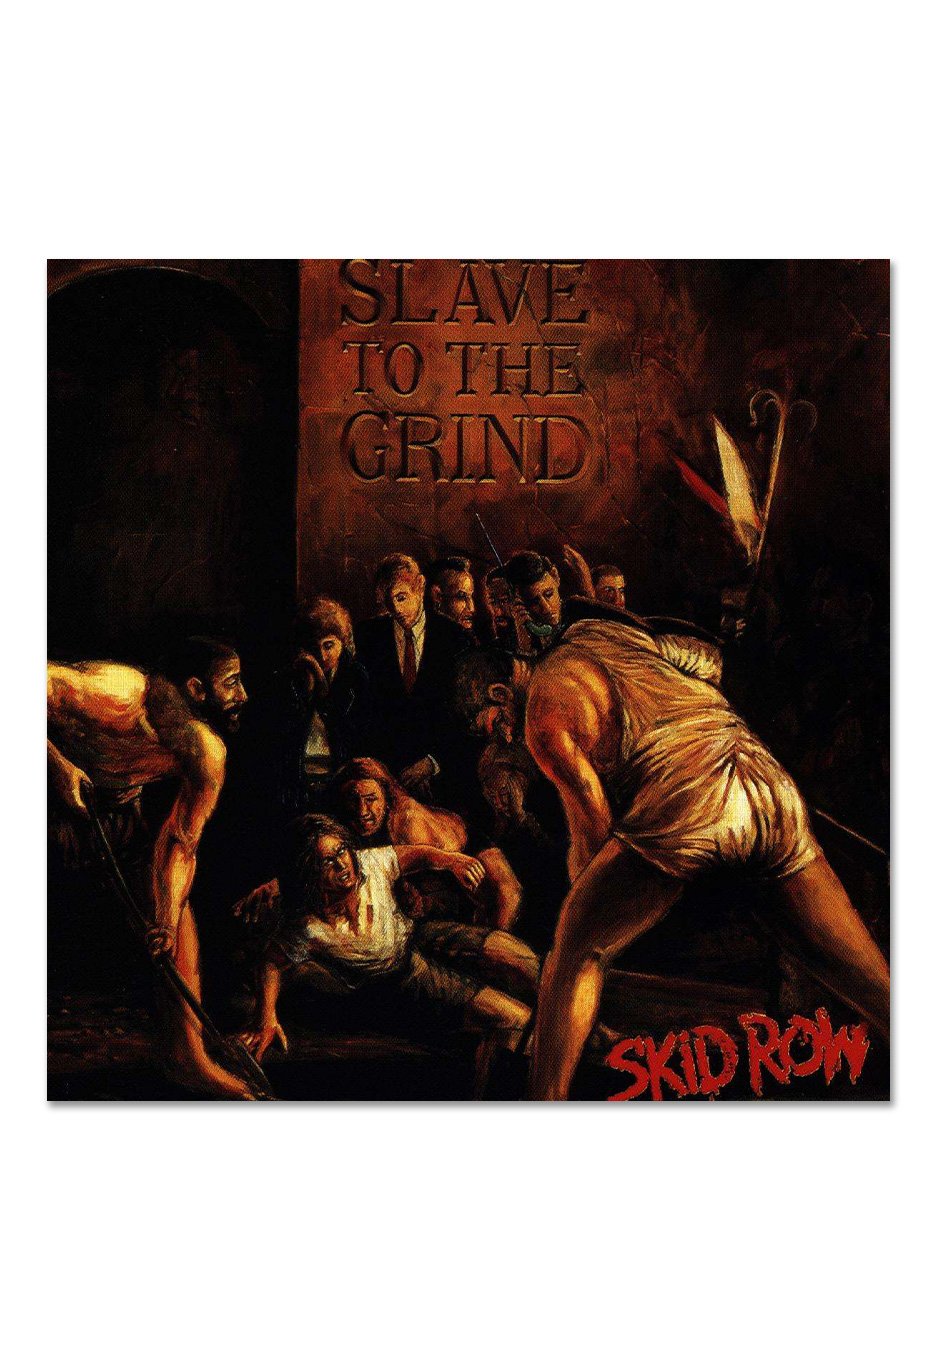 Skid Row - Slave To The Grind - 2 Vinyl